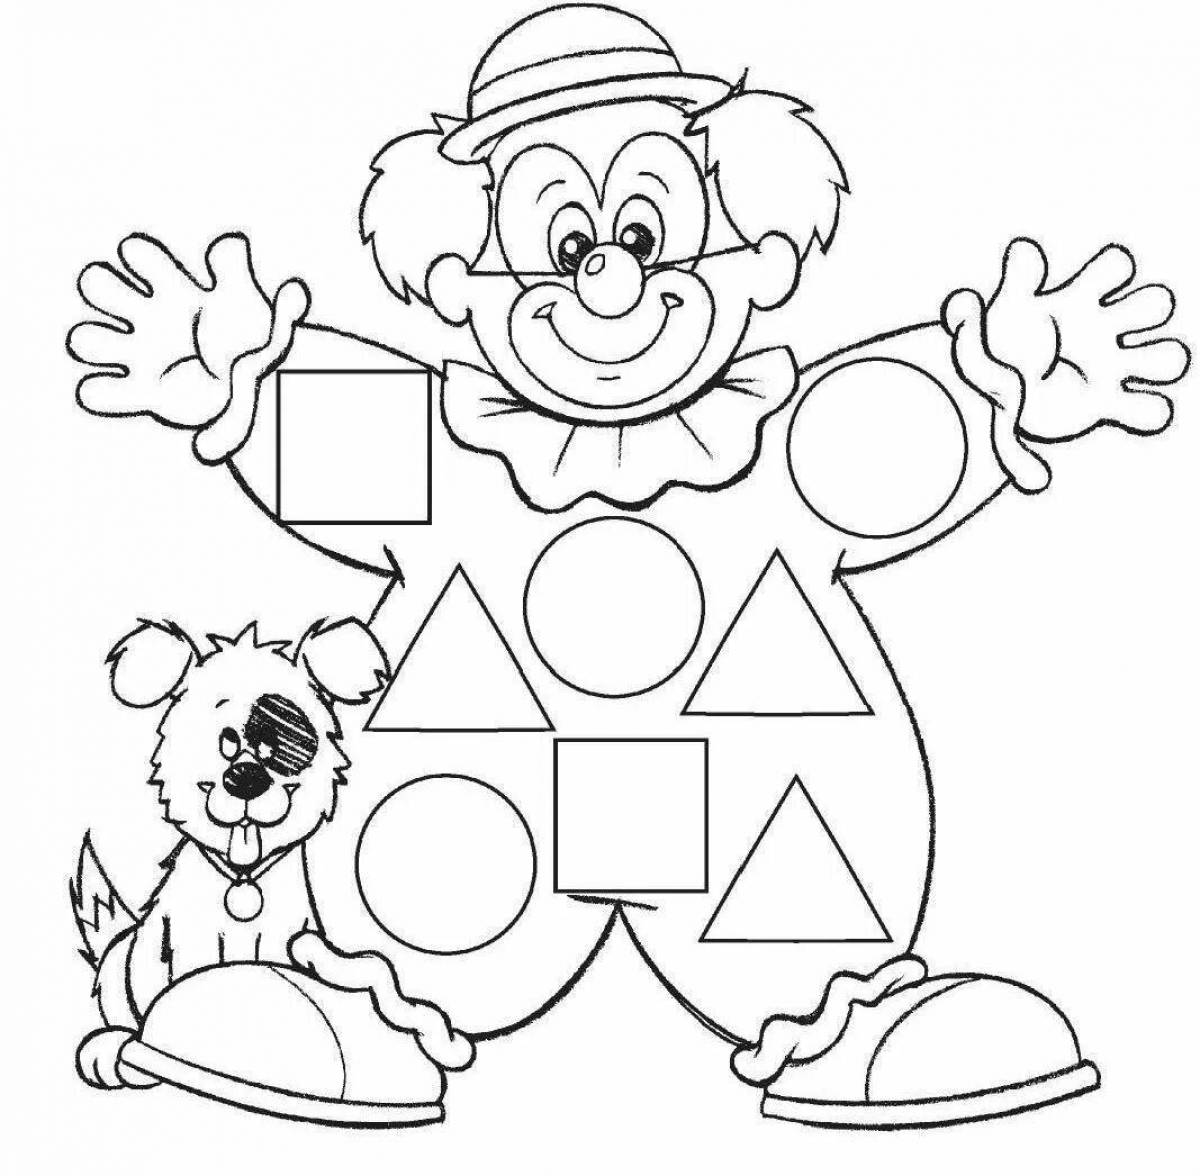 Funny clown coloring book for preschoolers